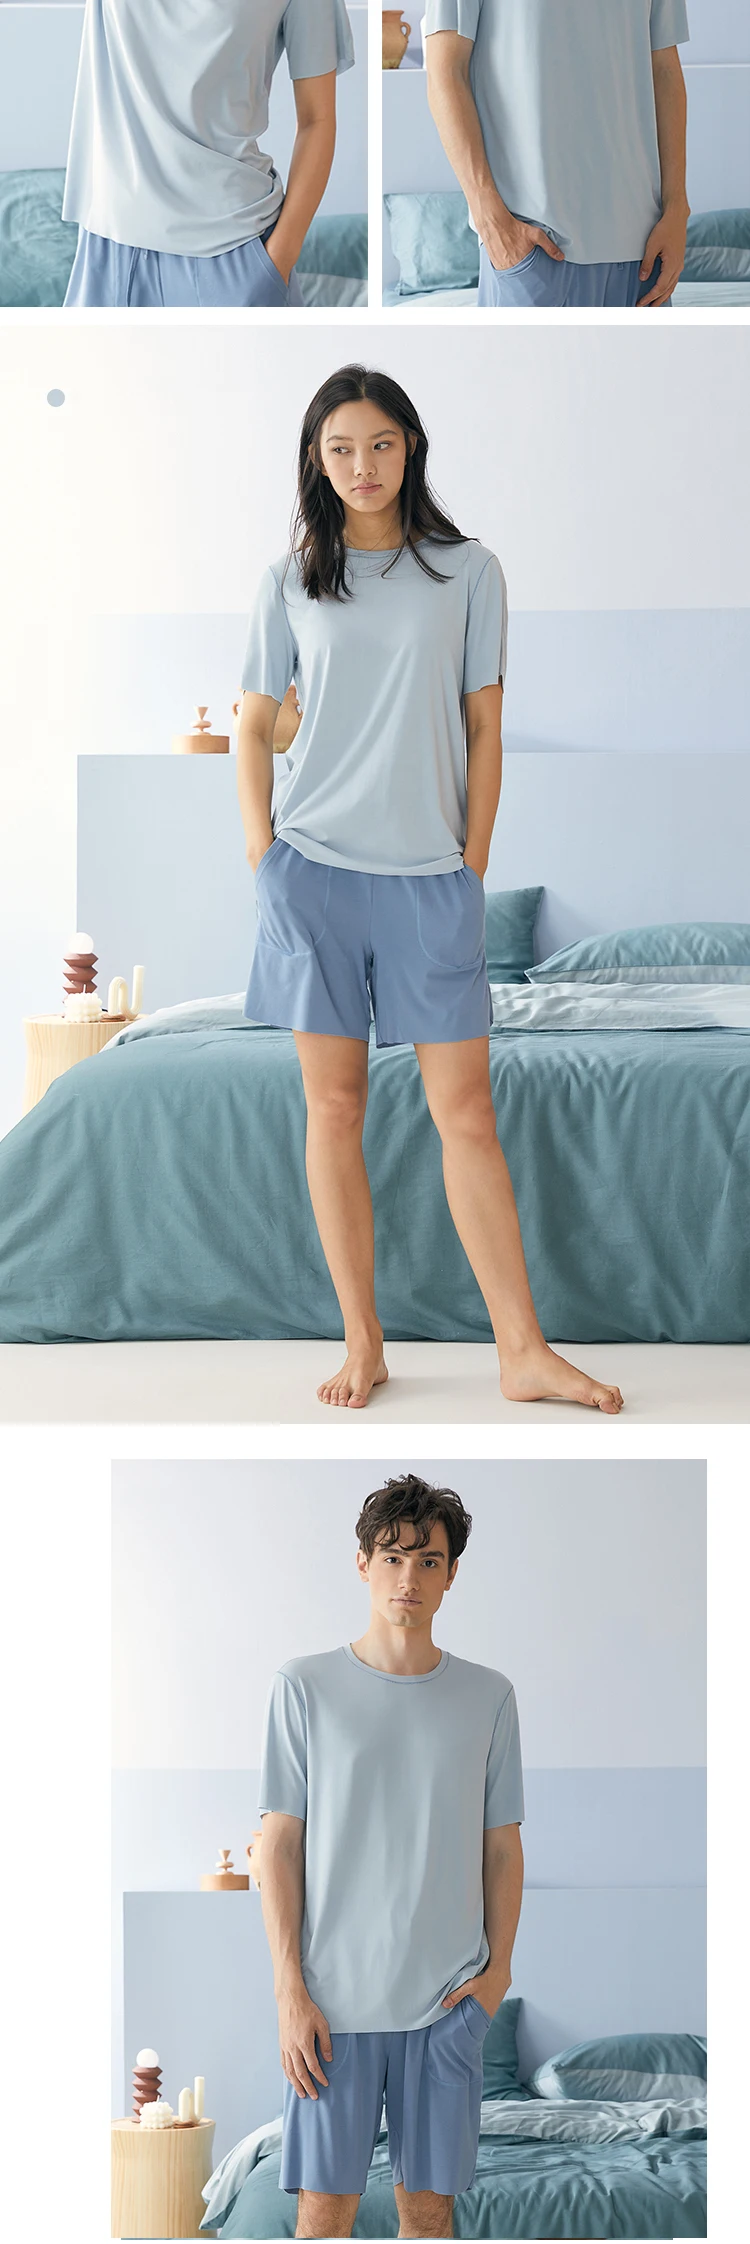 Enerup Wholesale Custom Unisex Breathable Soft Comfortable Round Neck Women Men's Copper Ion Modal T-shirt